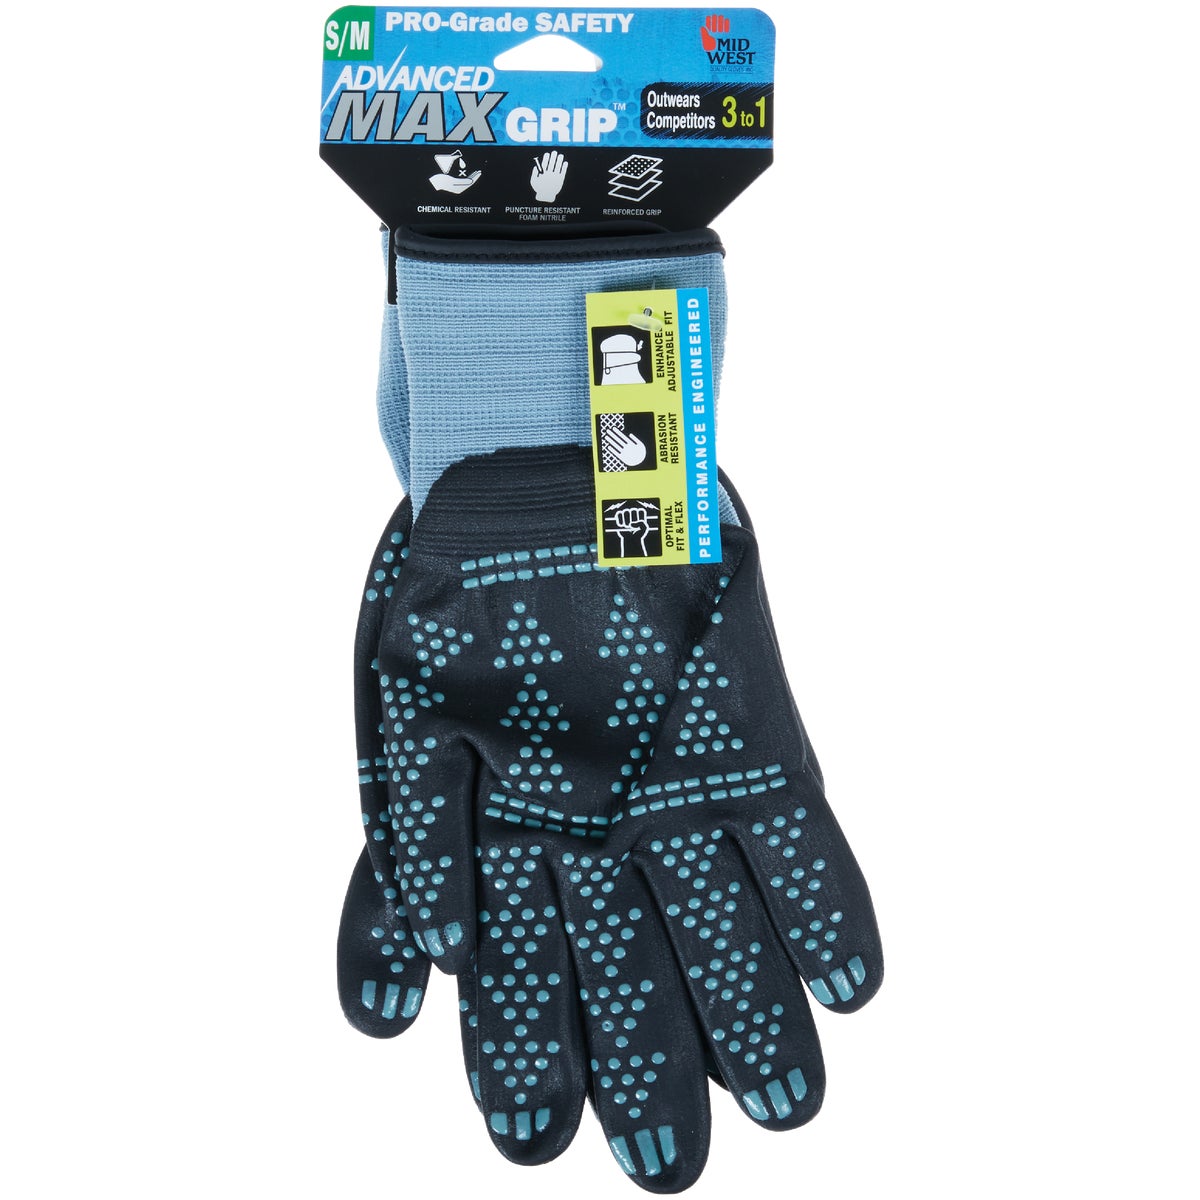 Midwest Gloves & Gear 95SL-SM-DB-6 Midwest Gloves & Gear Advanced MAX Grip Unisex Small/Medium Nitrile Coated Gloves 95SL-SM-DB-